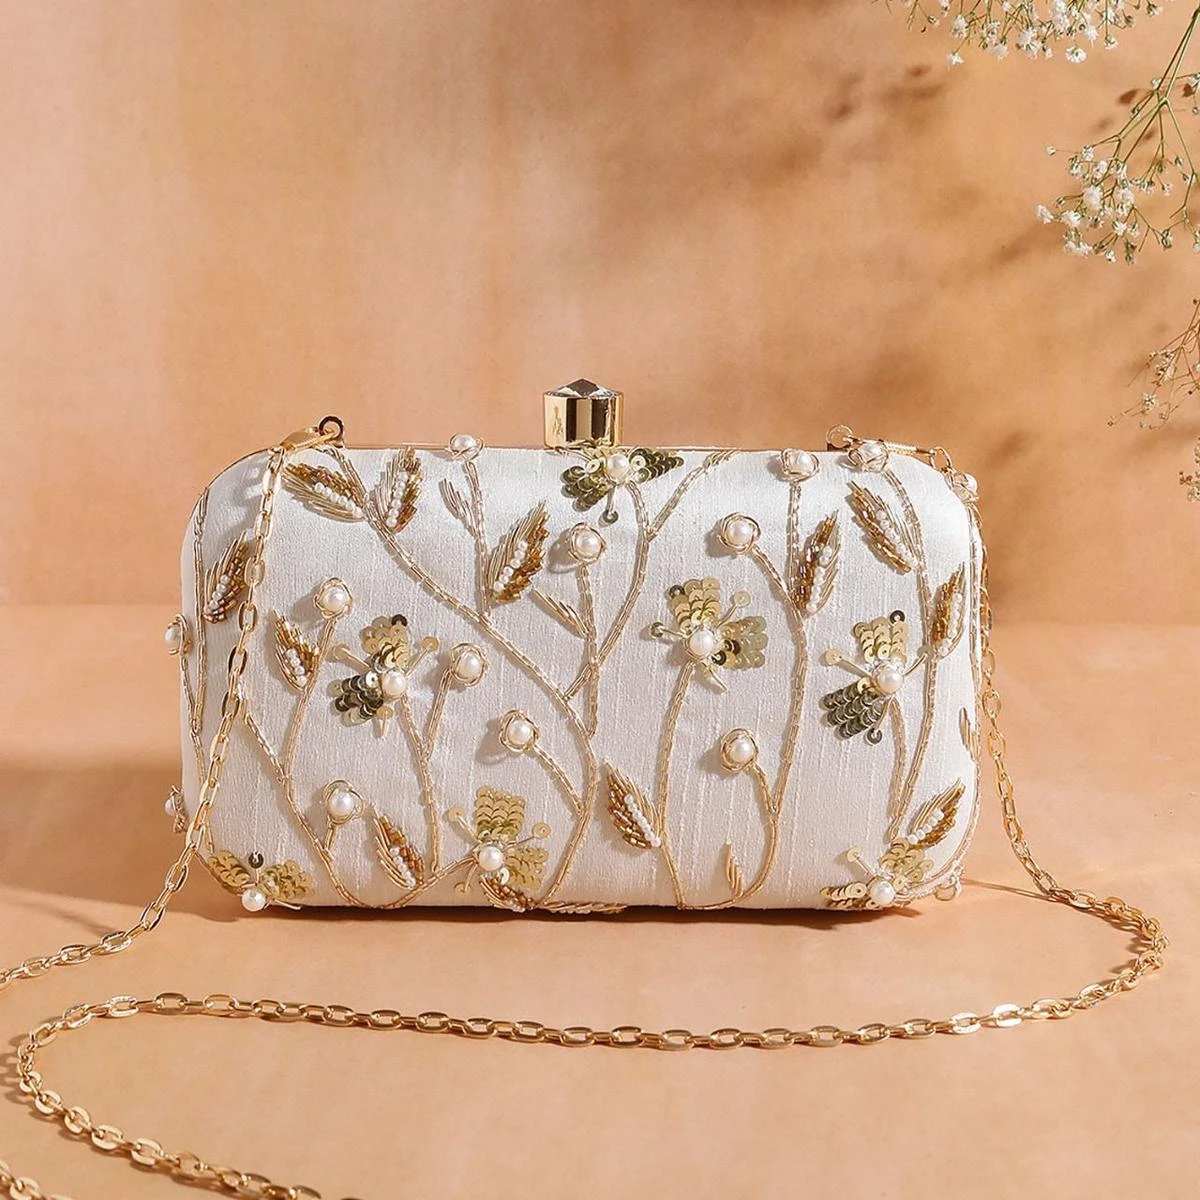 Make Beautiful Purse Styled Embellishment Boxes - YouTube | Purse styles,  Paper purse, Diy purse box